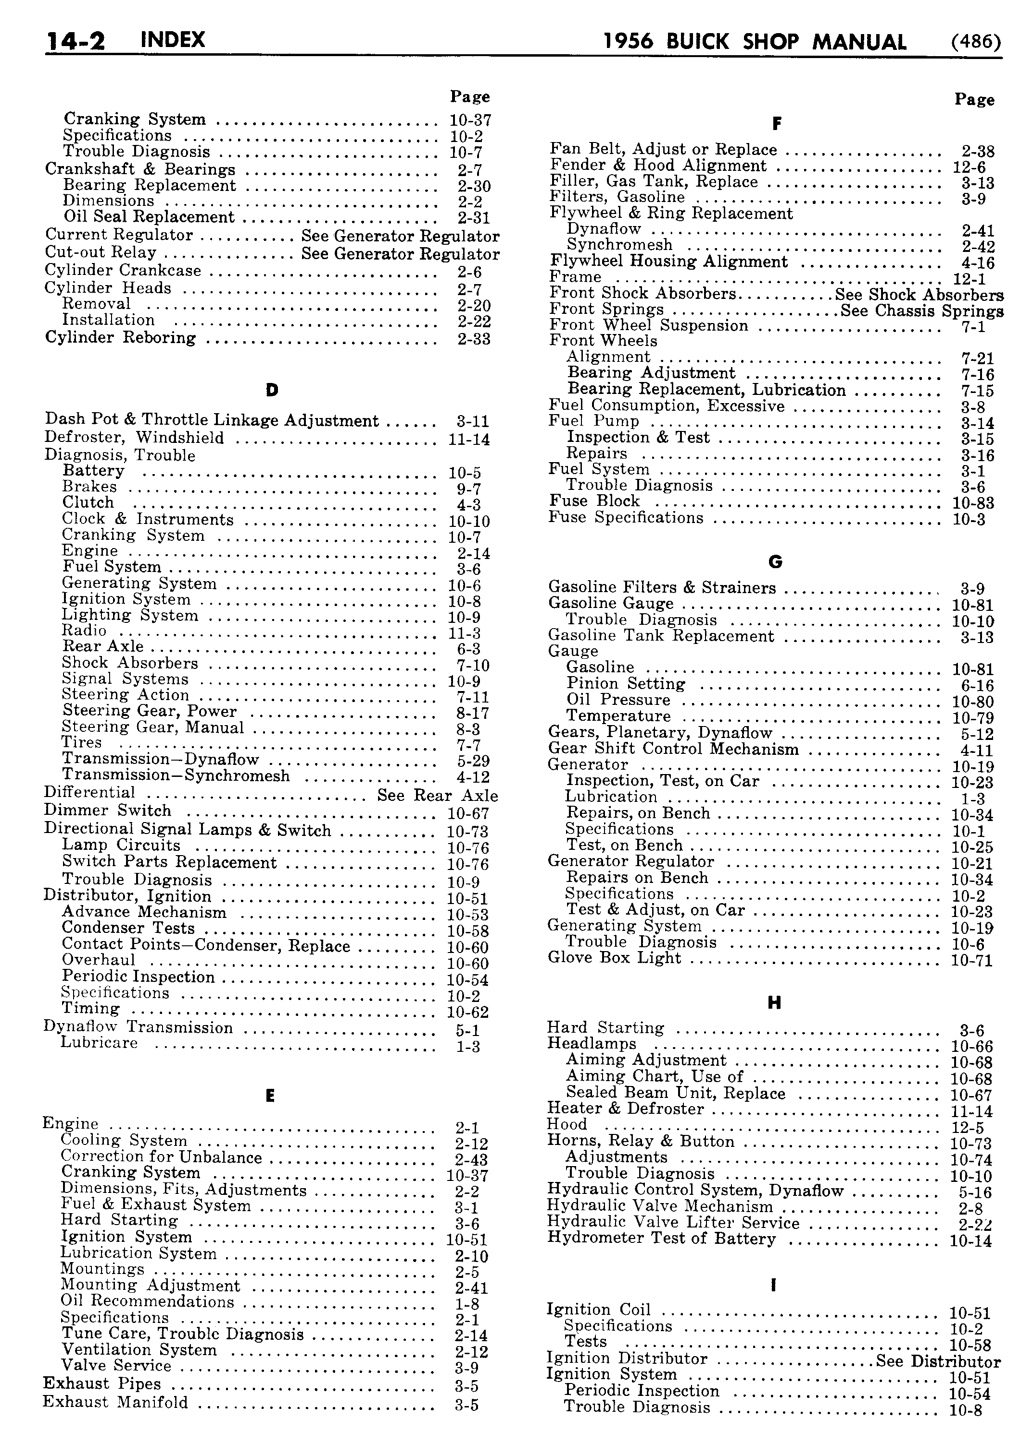 n_15 1956 Buick Shop Manual - Index-002-002.jpg